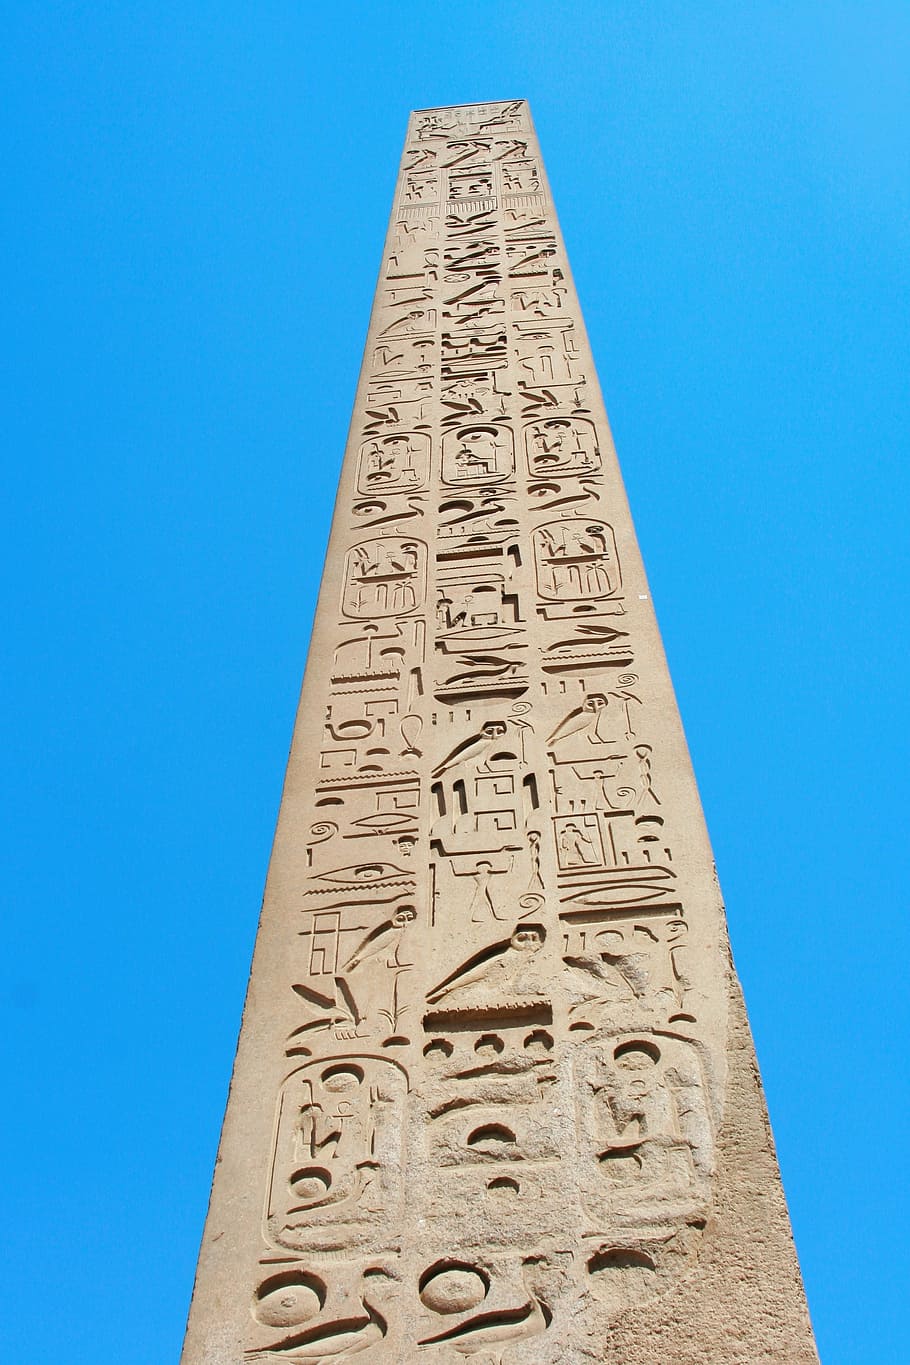 worm, eye view, tower, egypt, luxor, karnak temple, obelisk, hieroglyph, ancient, civilization